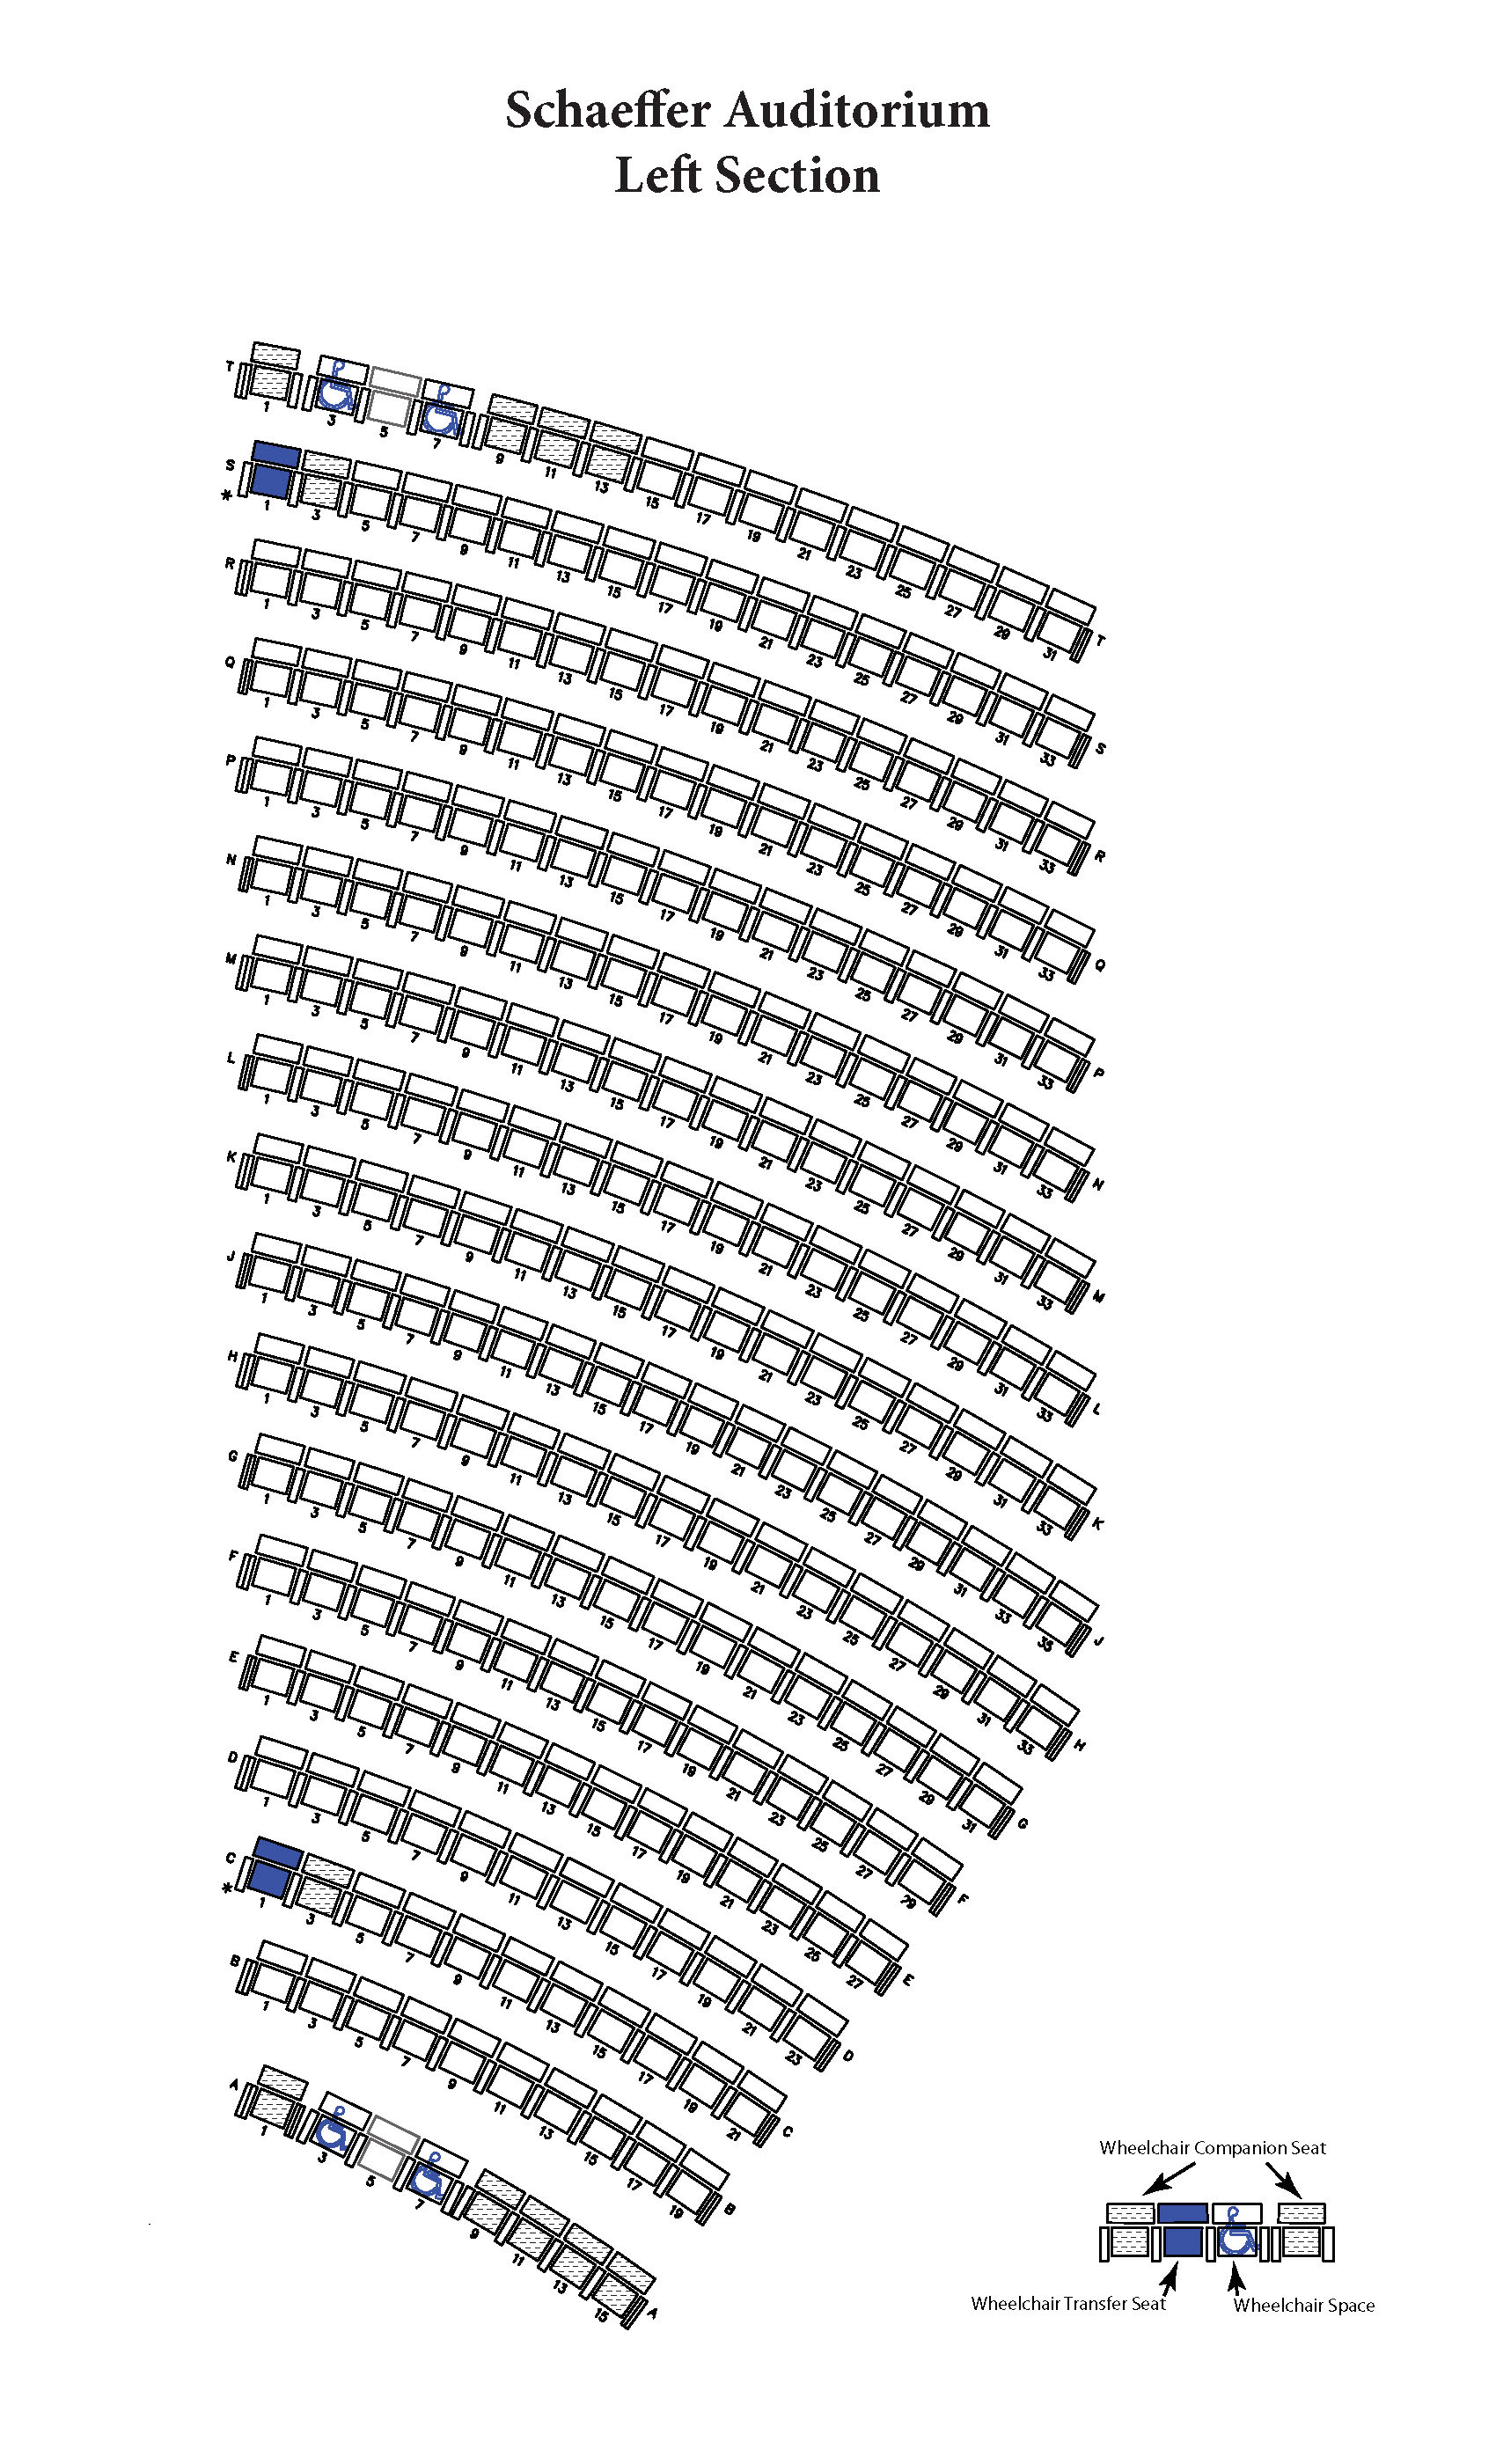 schaeffer seating chart left